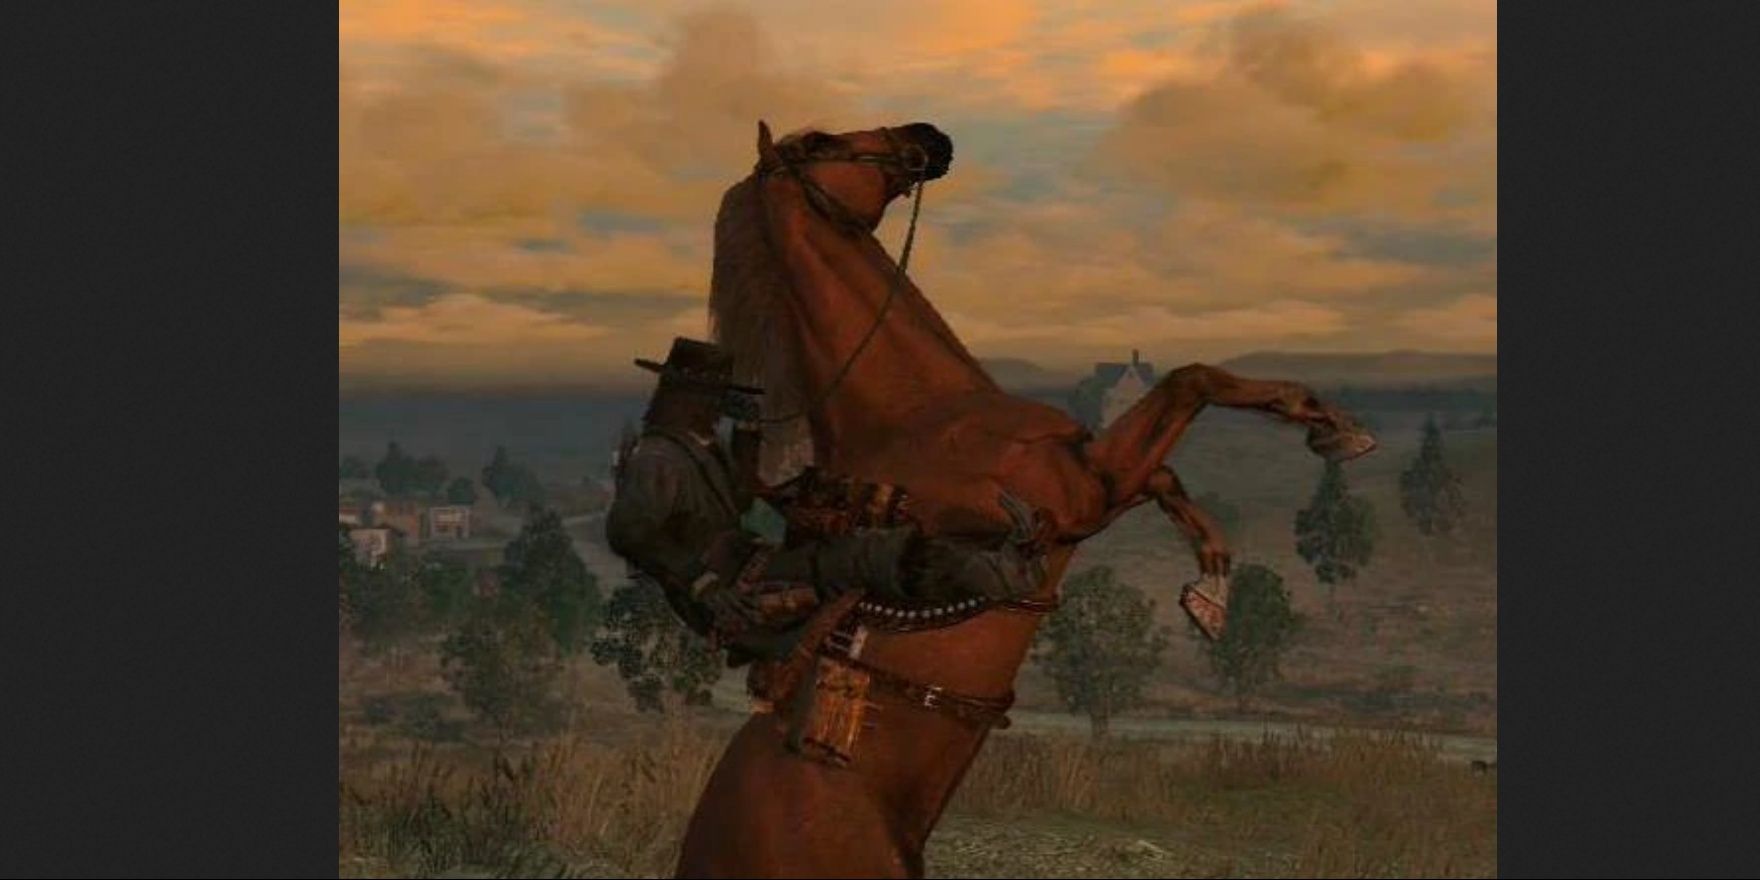 Quarter Horse in Red Dead Redemption